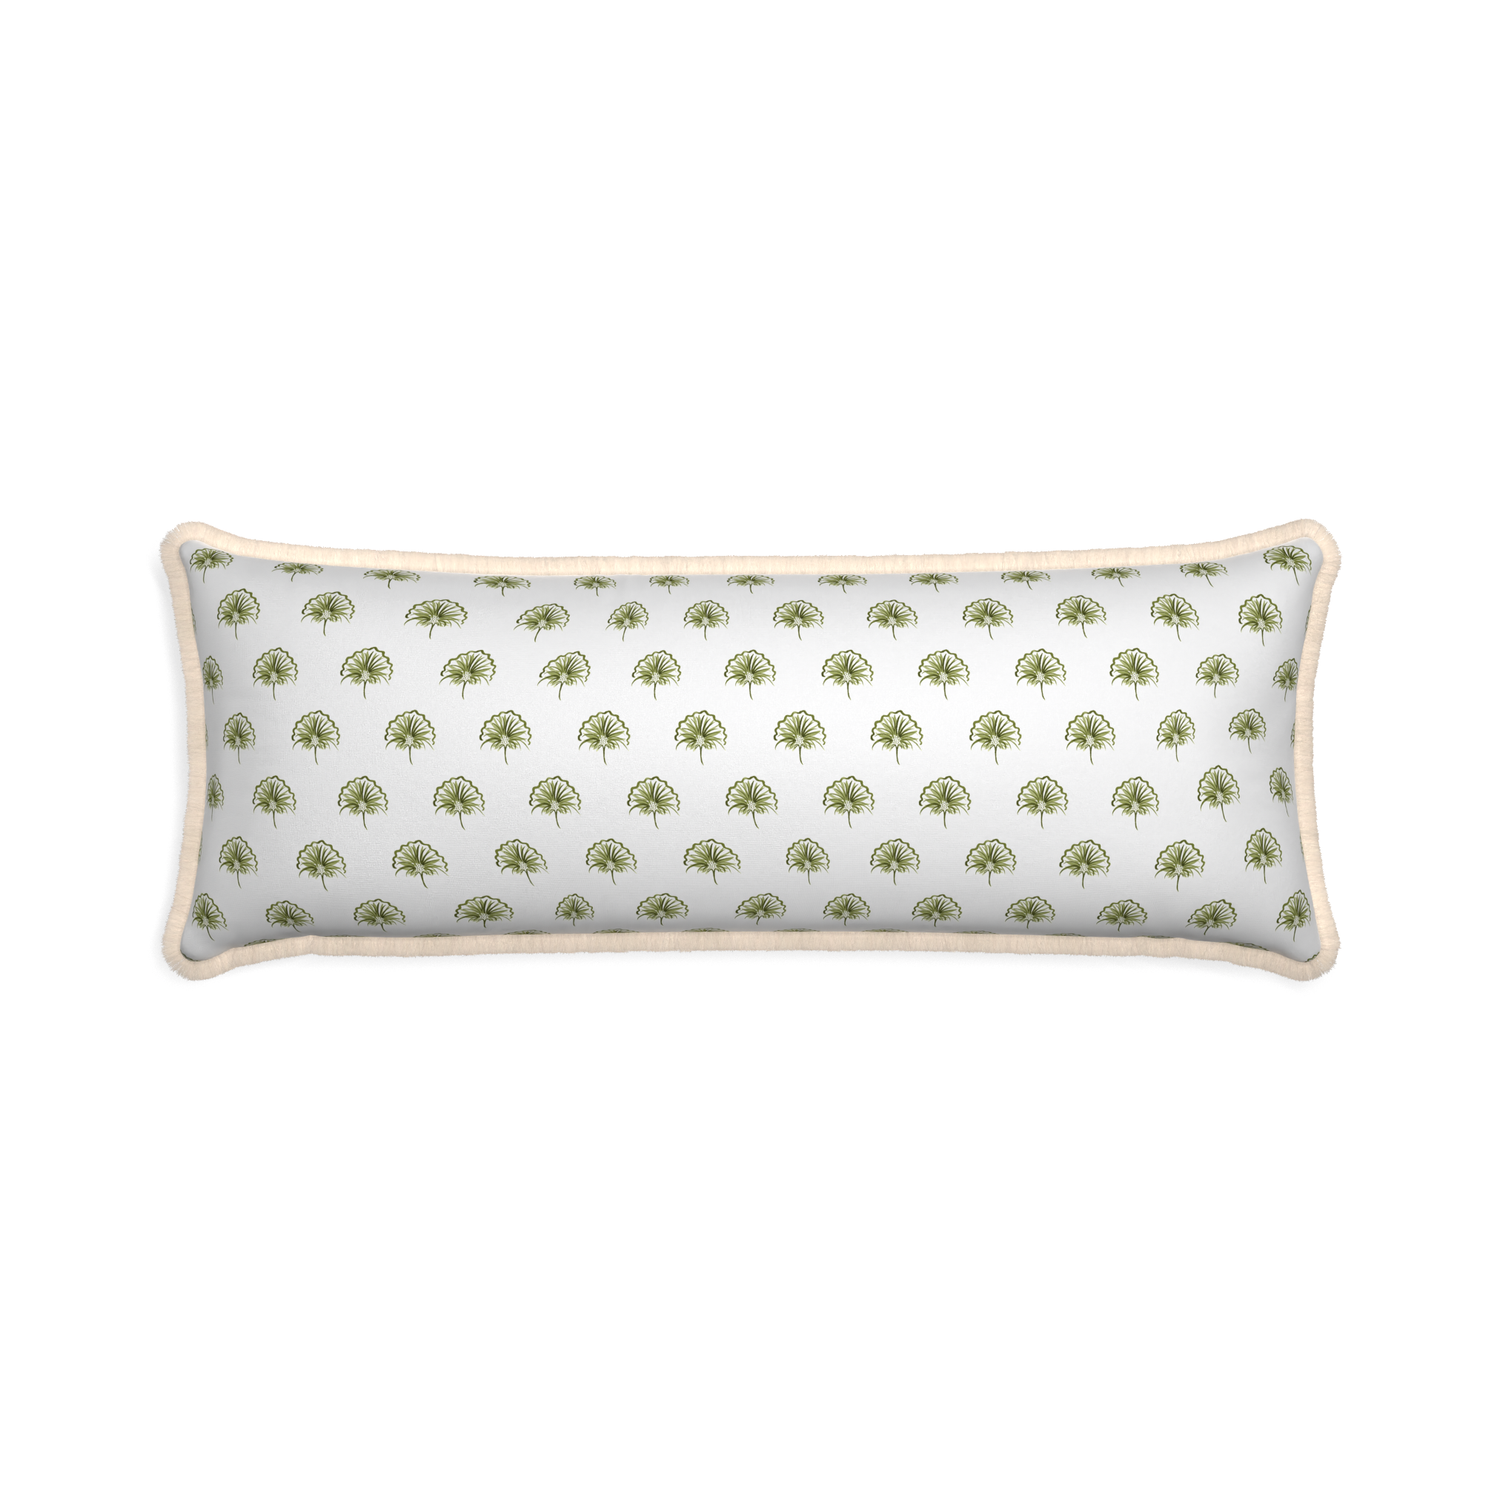 Xl-lumbar penelope moss custom pillow with cream fringe on white background